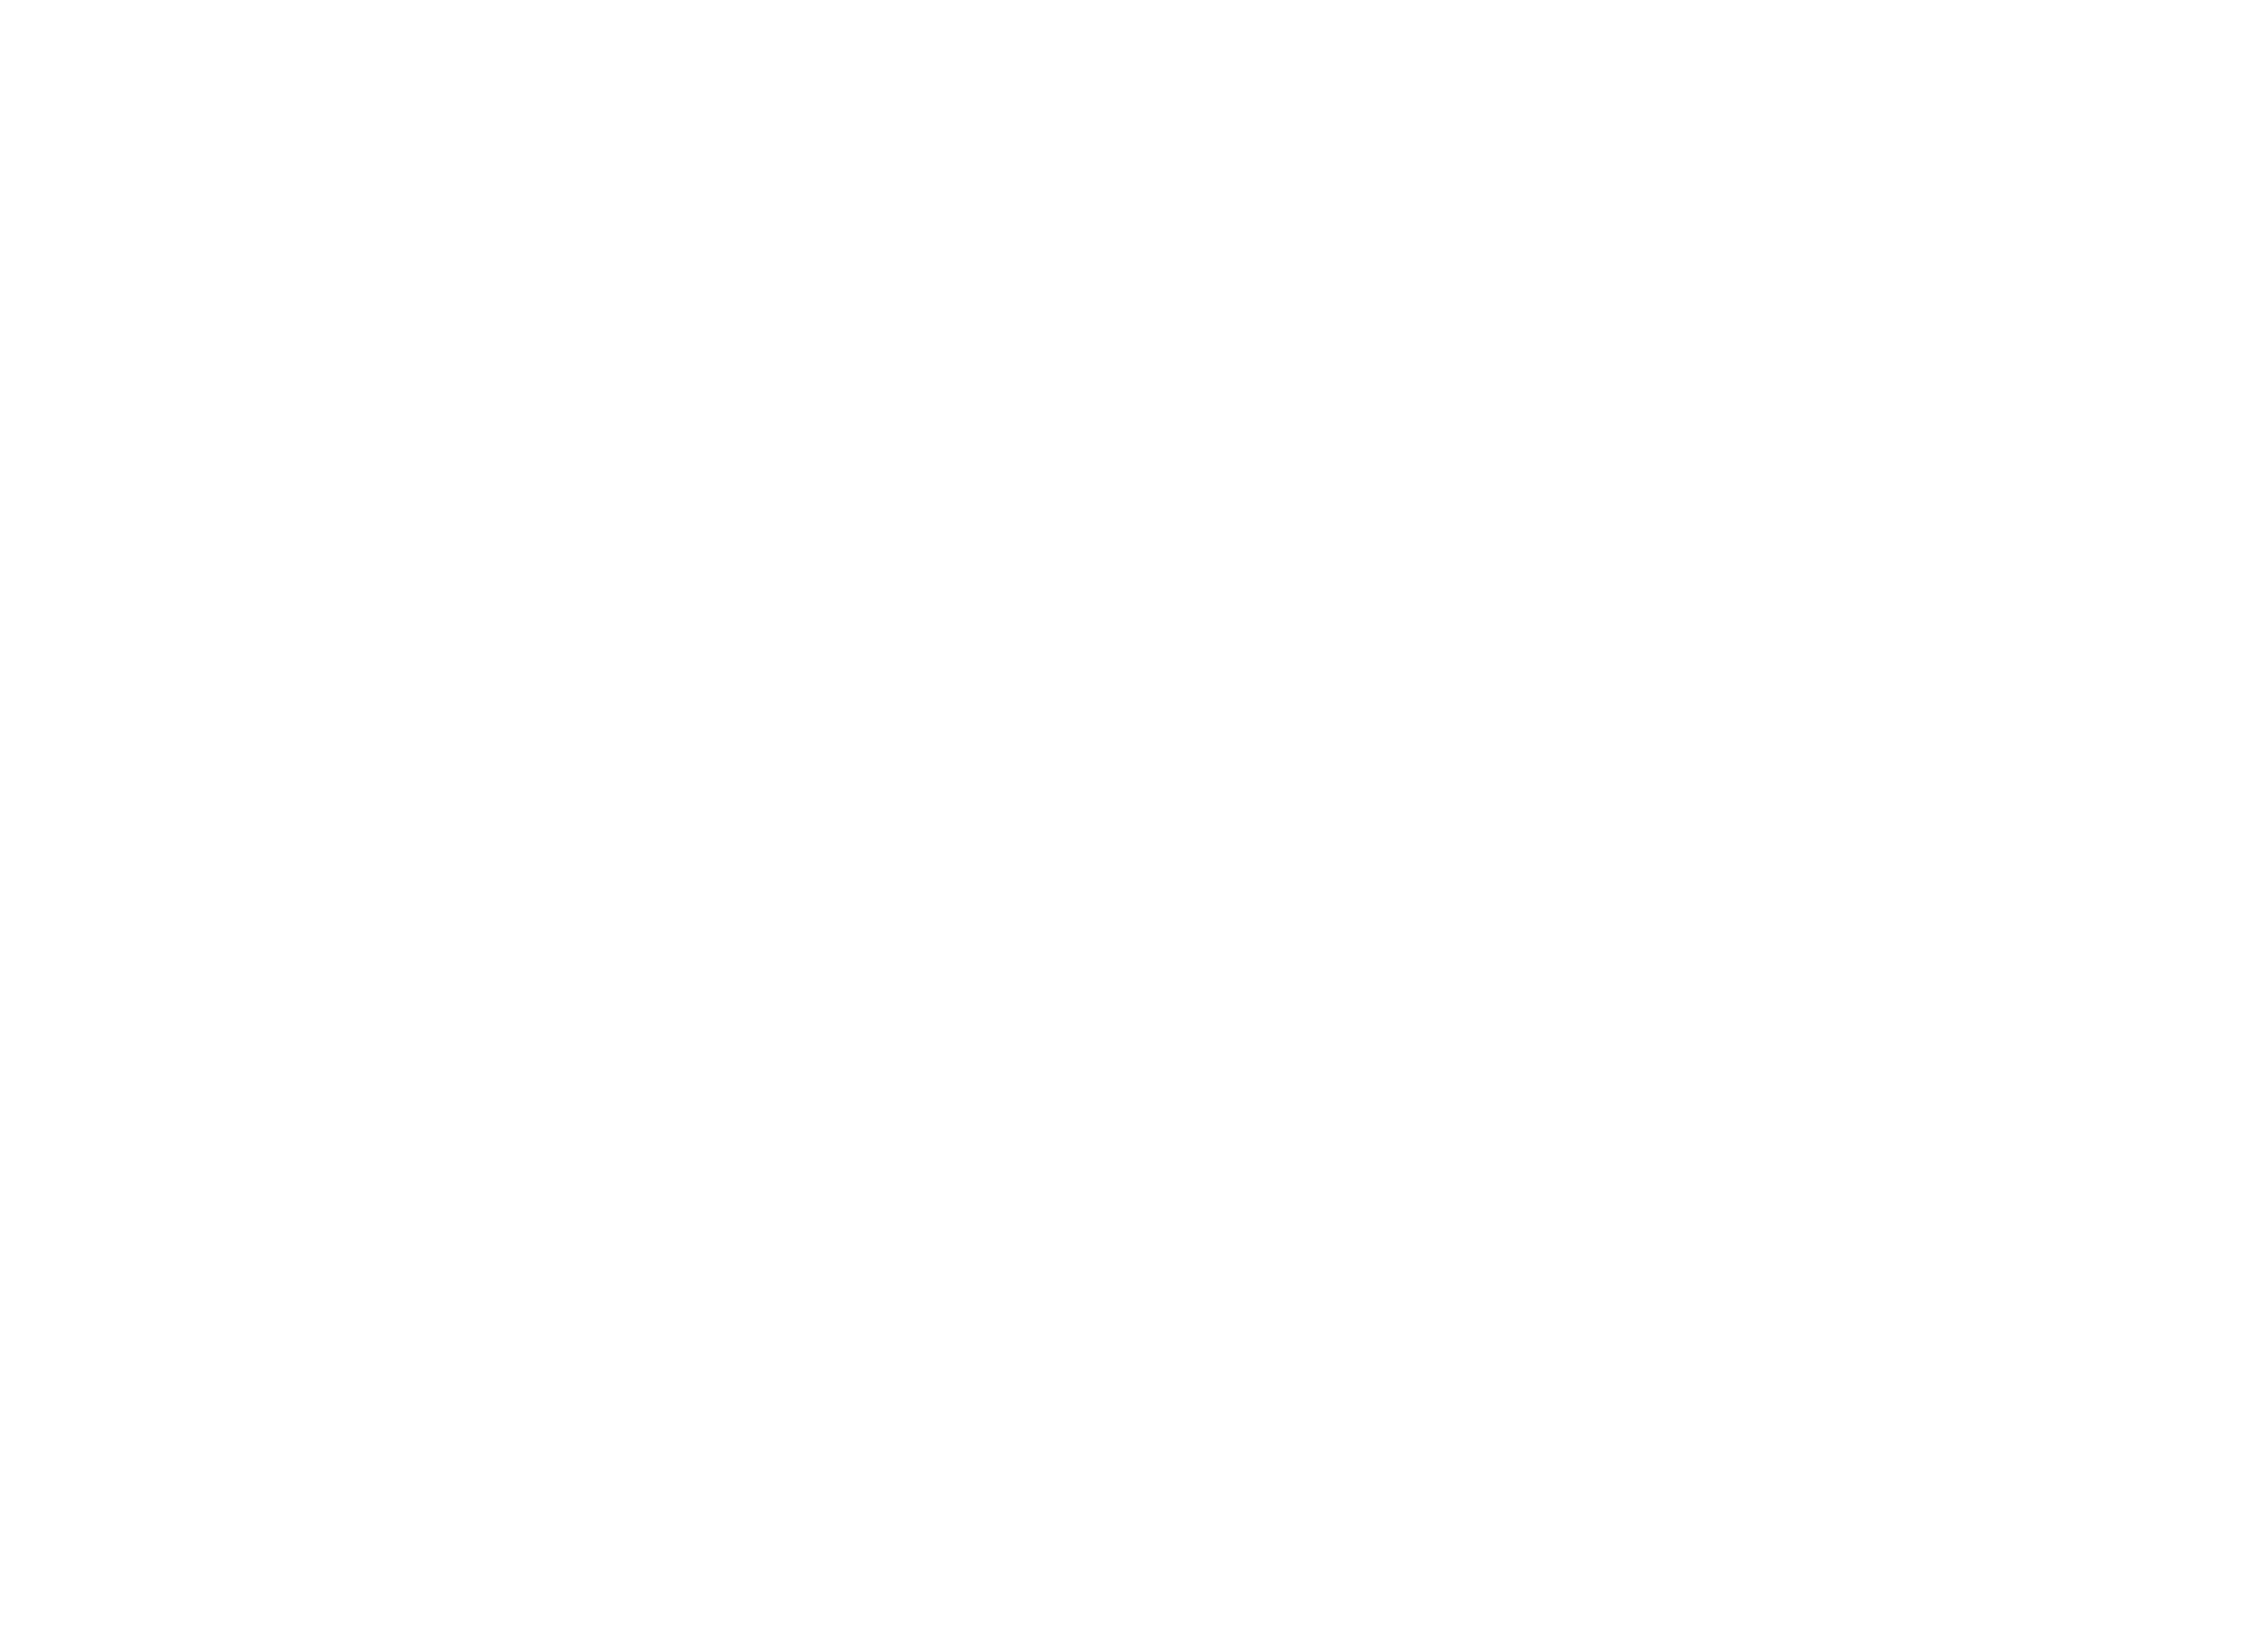 Interbay & Precise Mortgages